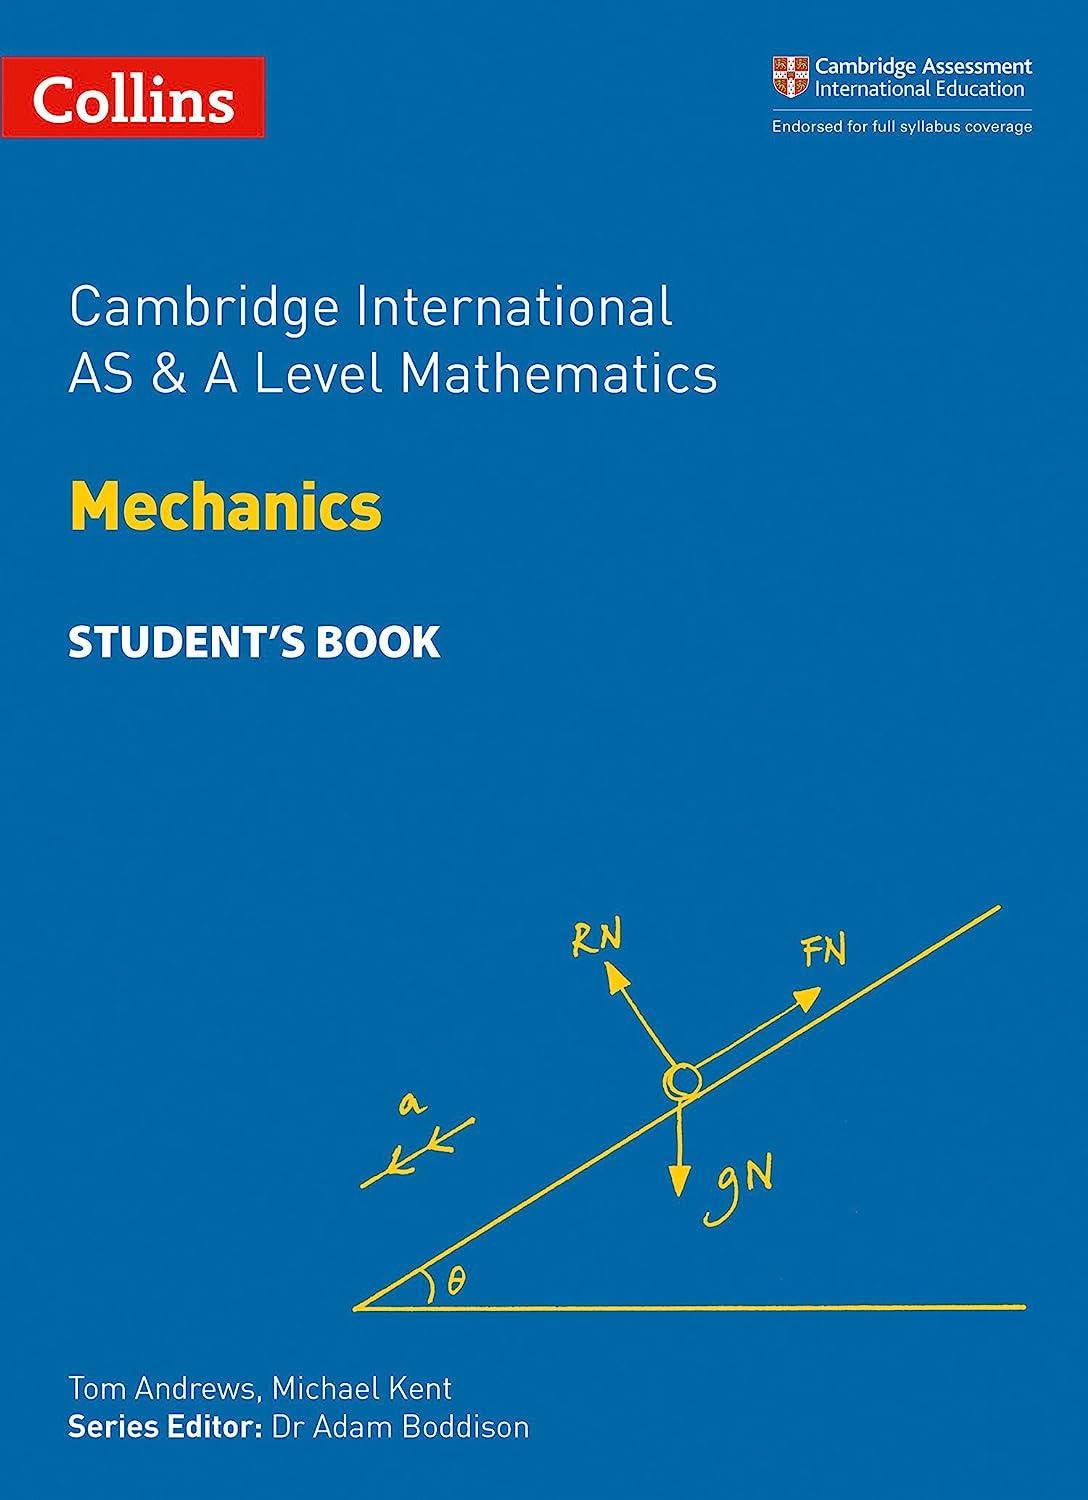 cambridge international as and a level mathematics mechanics student book 1st edition tom andrews, michael